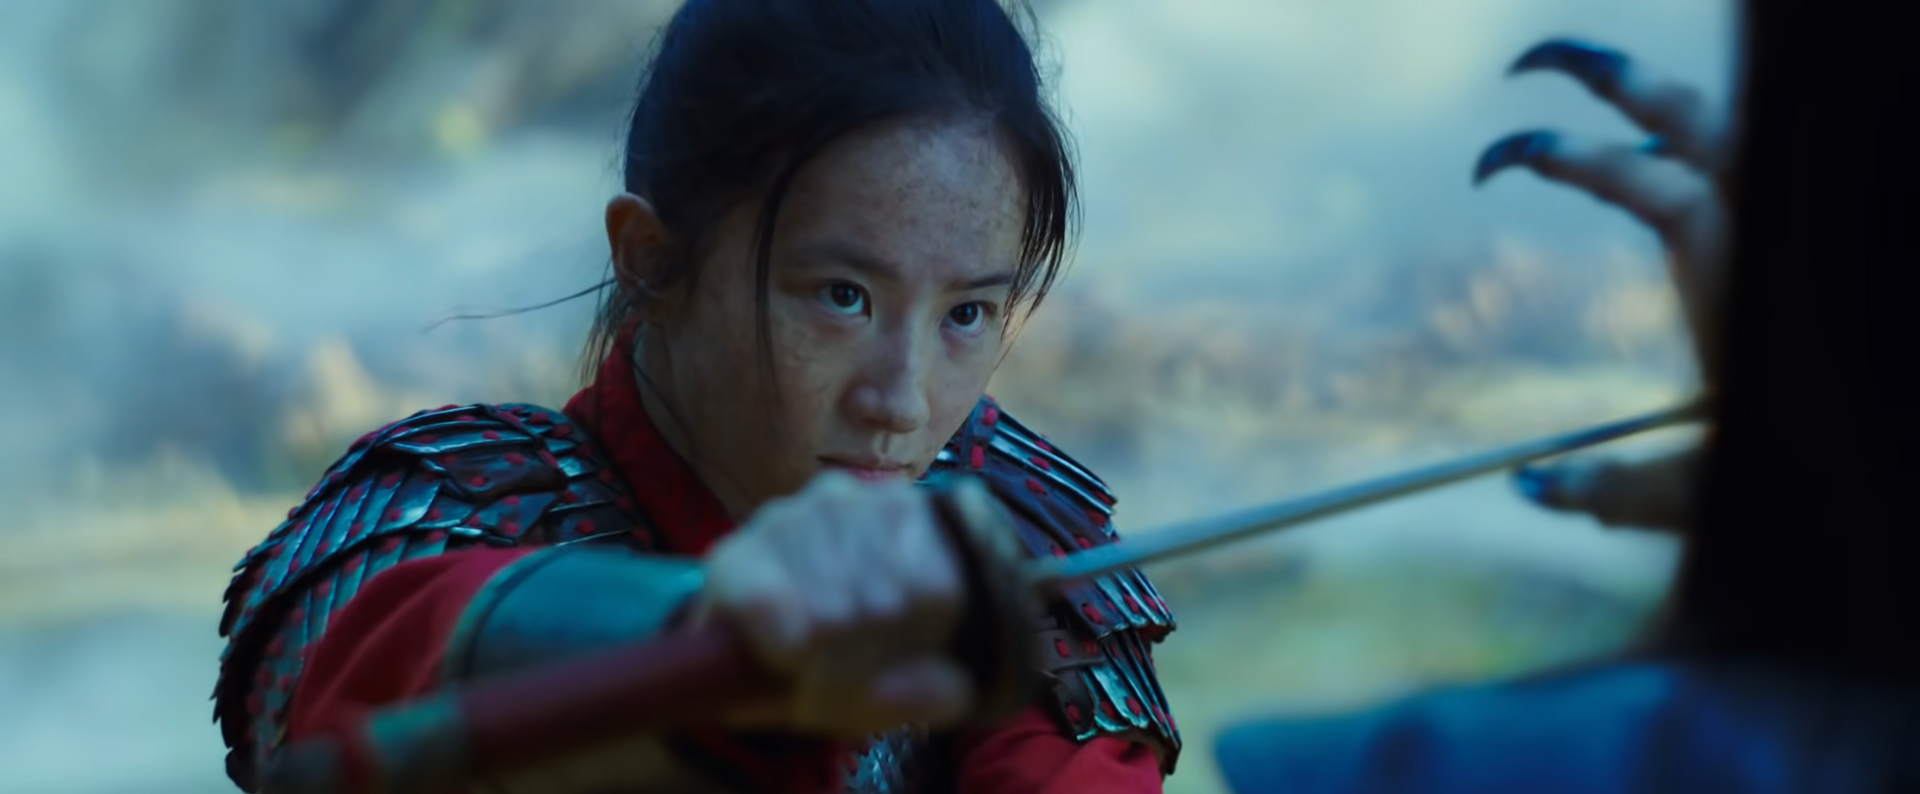 Záber z filmu Mulan